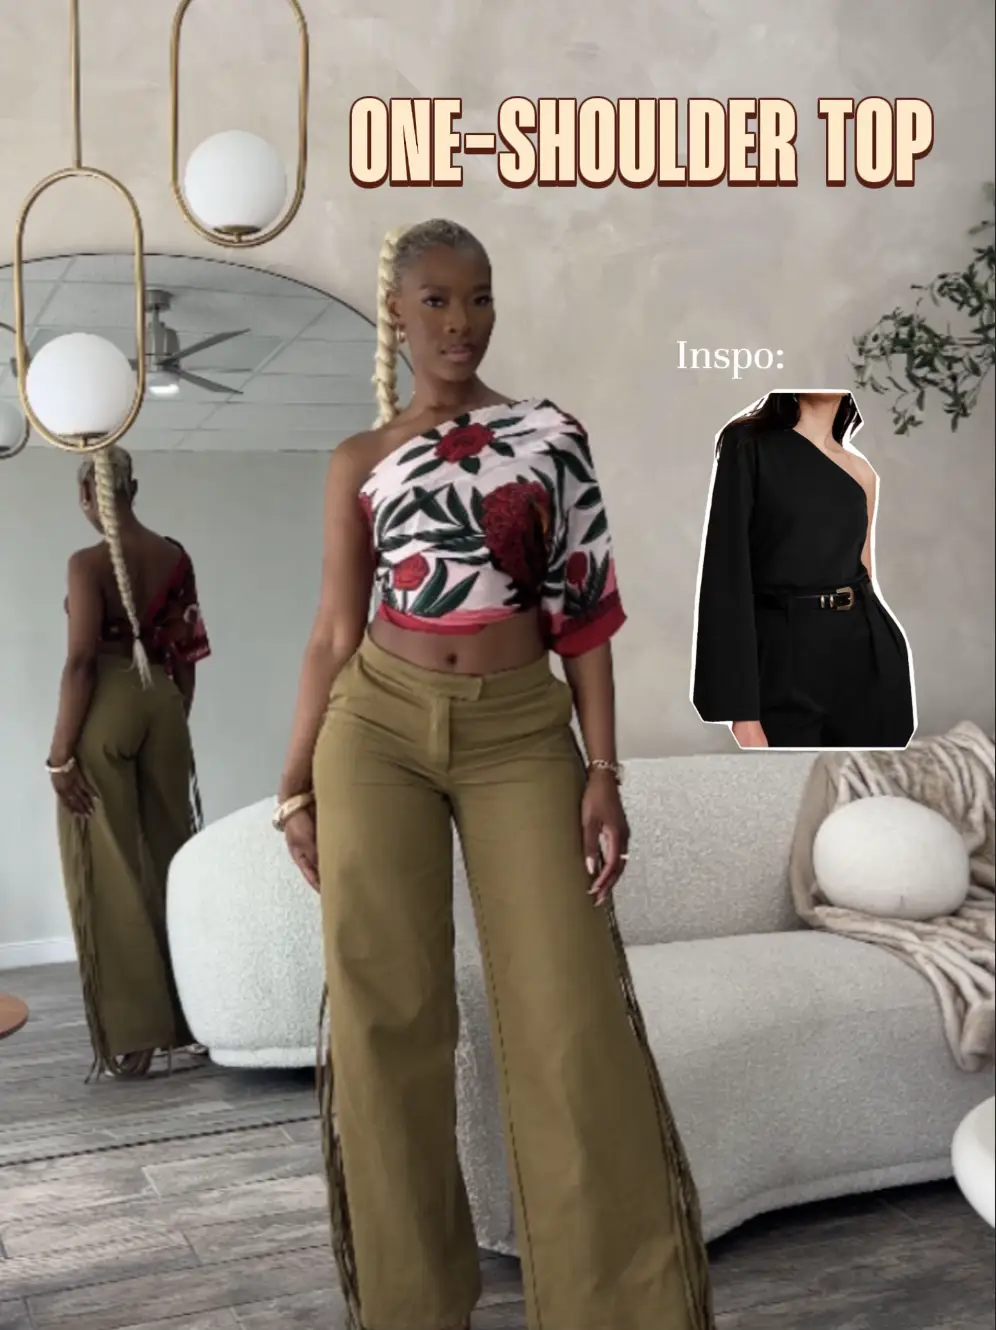 ALTERED brown brandy melville jada corduroy pants, Women's Fashion